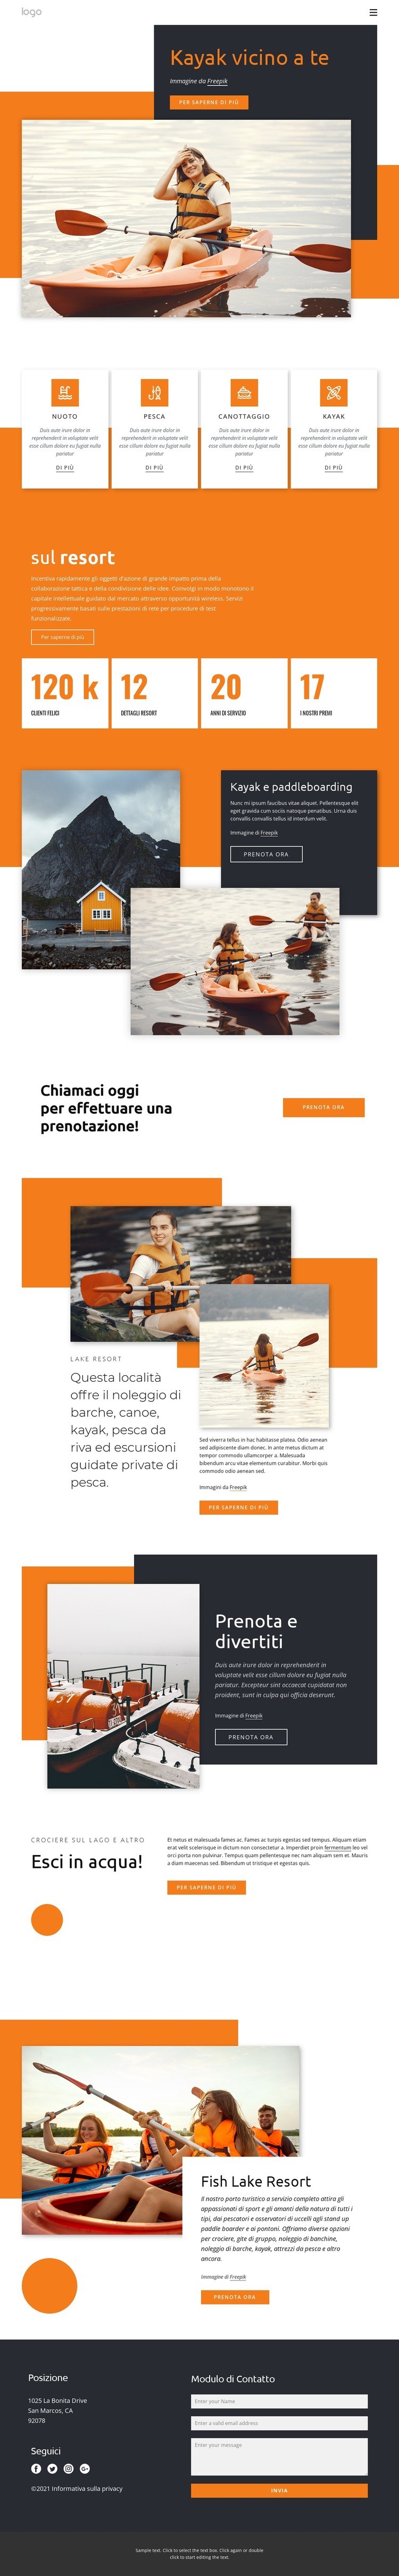 Canoa e kayak Un modello di pagina